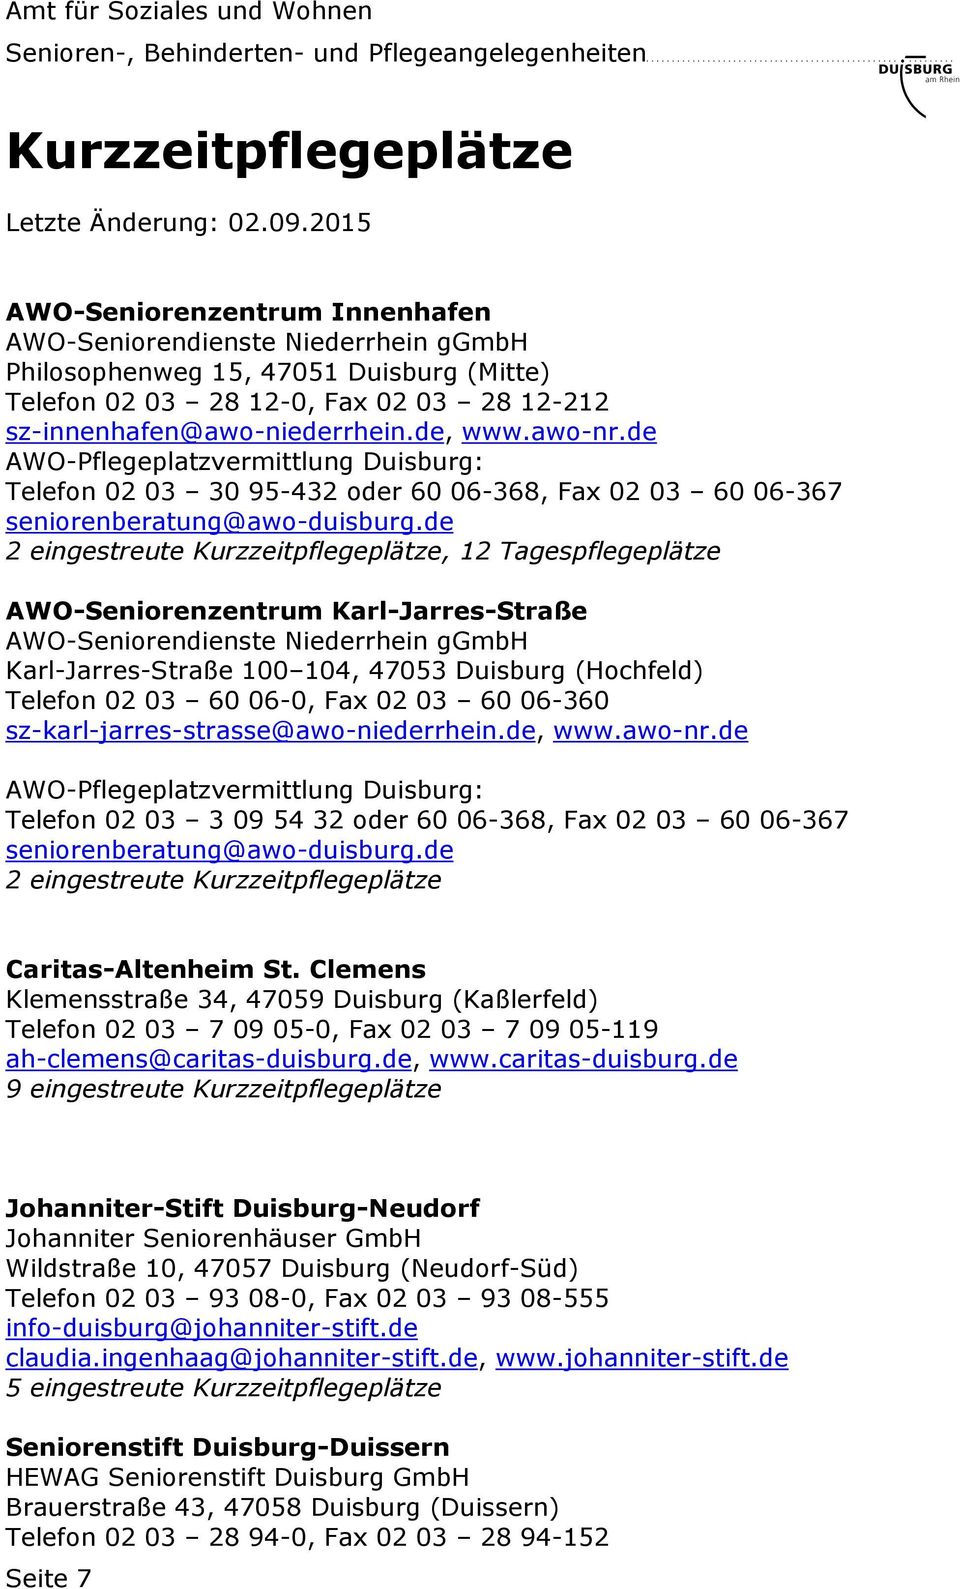 104, 47053 Duisburg (Hochfeld) Telefon 02 03 60 06-0, Fax 02 03 60 06-360 sz-karl-jarres-strasse@awo-niederrhein.de, www.awo-nr.